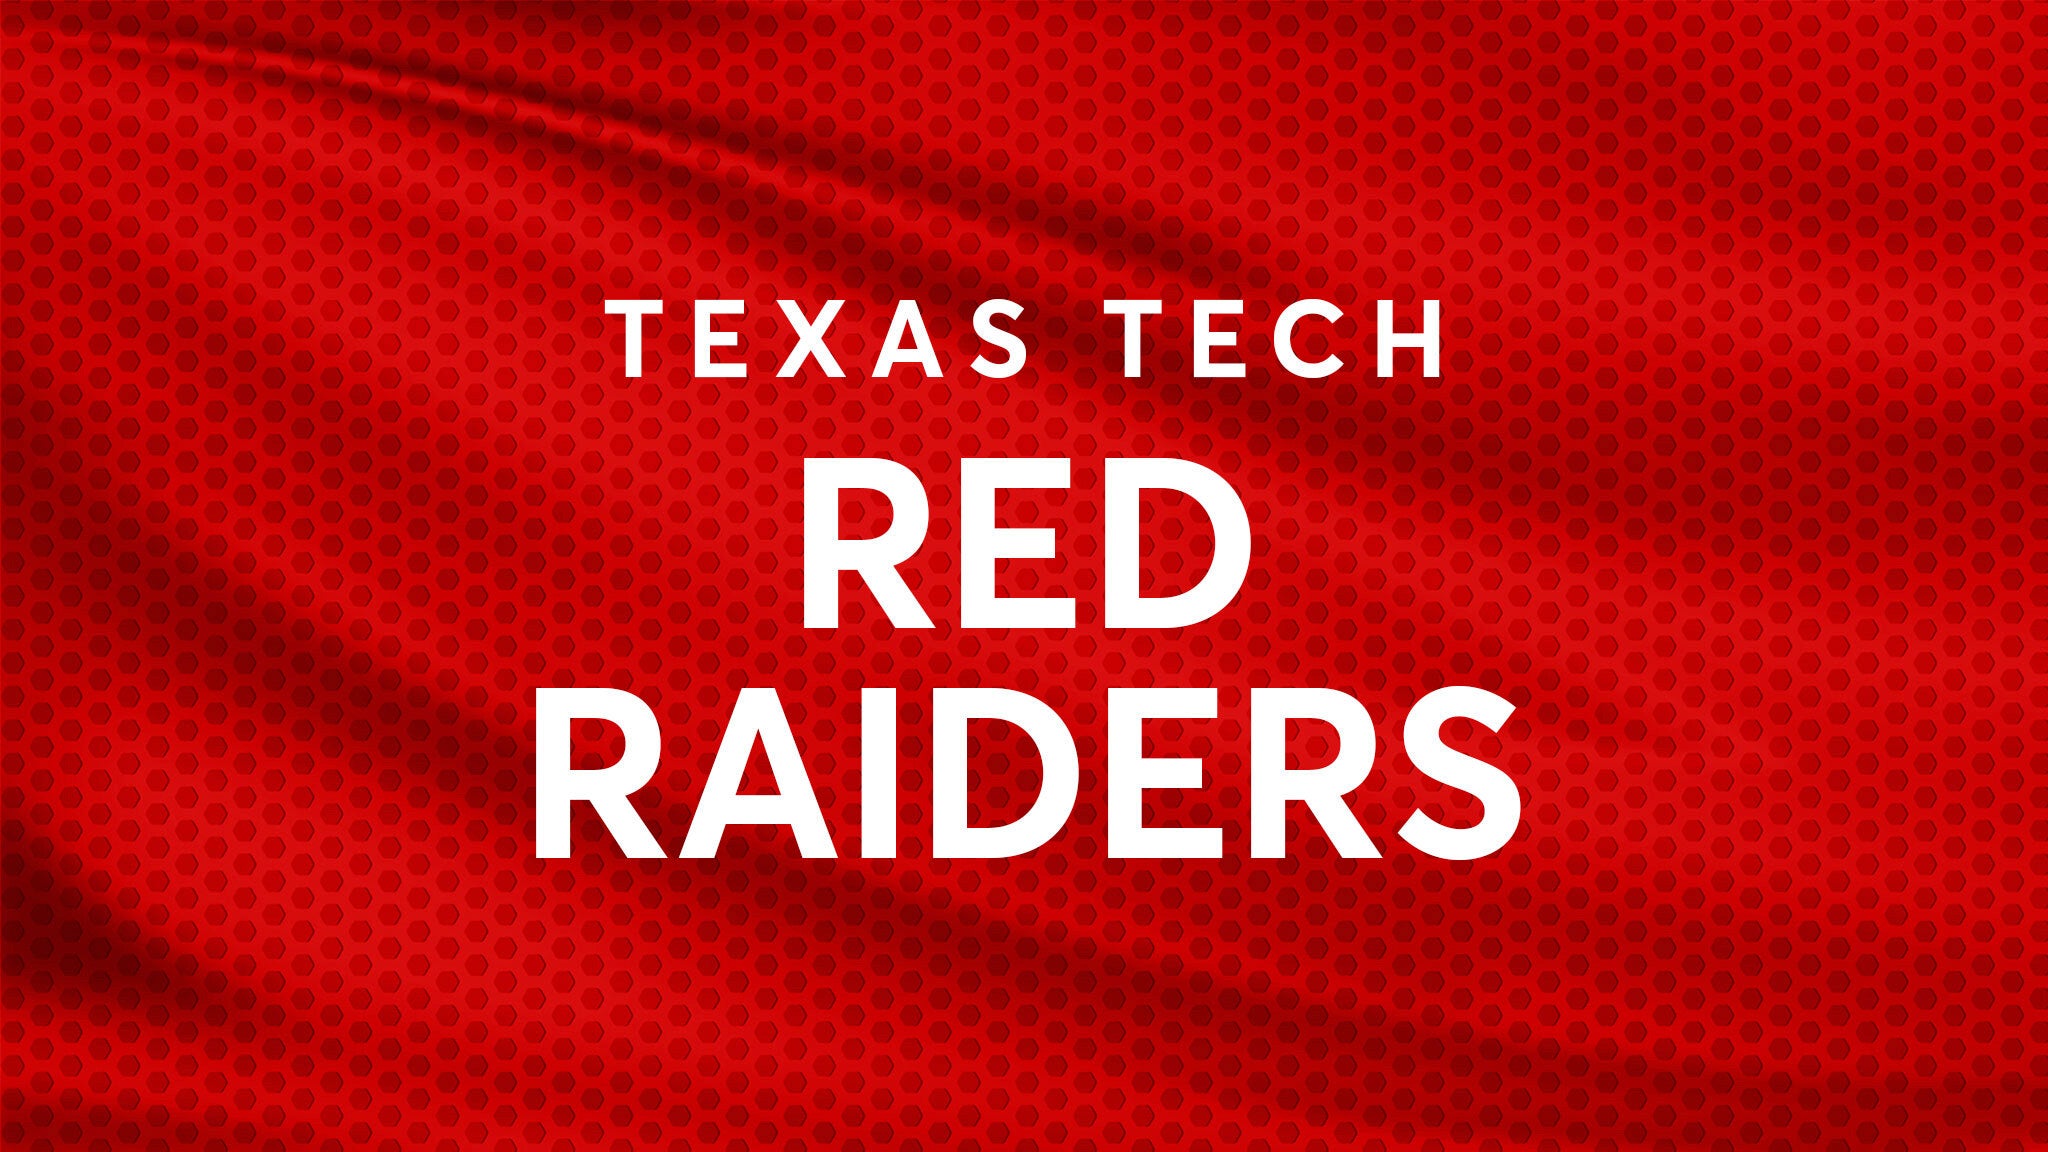 Texas Tech Red Raiders Football vs. Arizona State Sun Devils Football hero